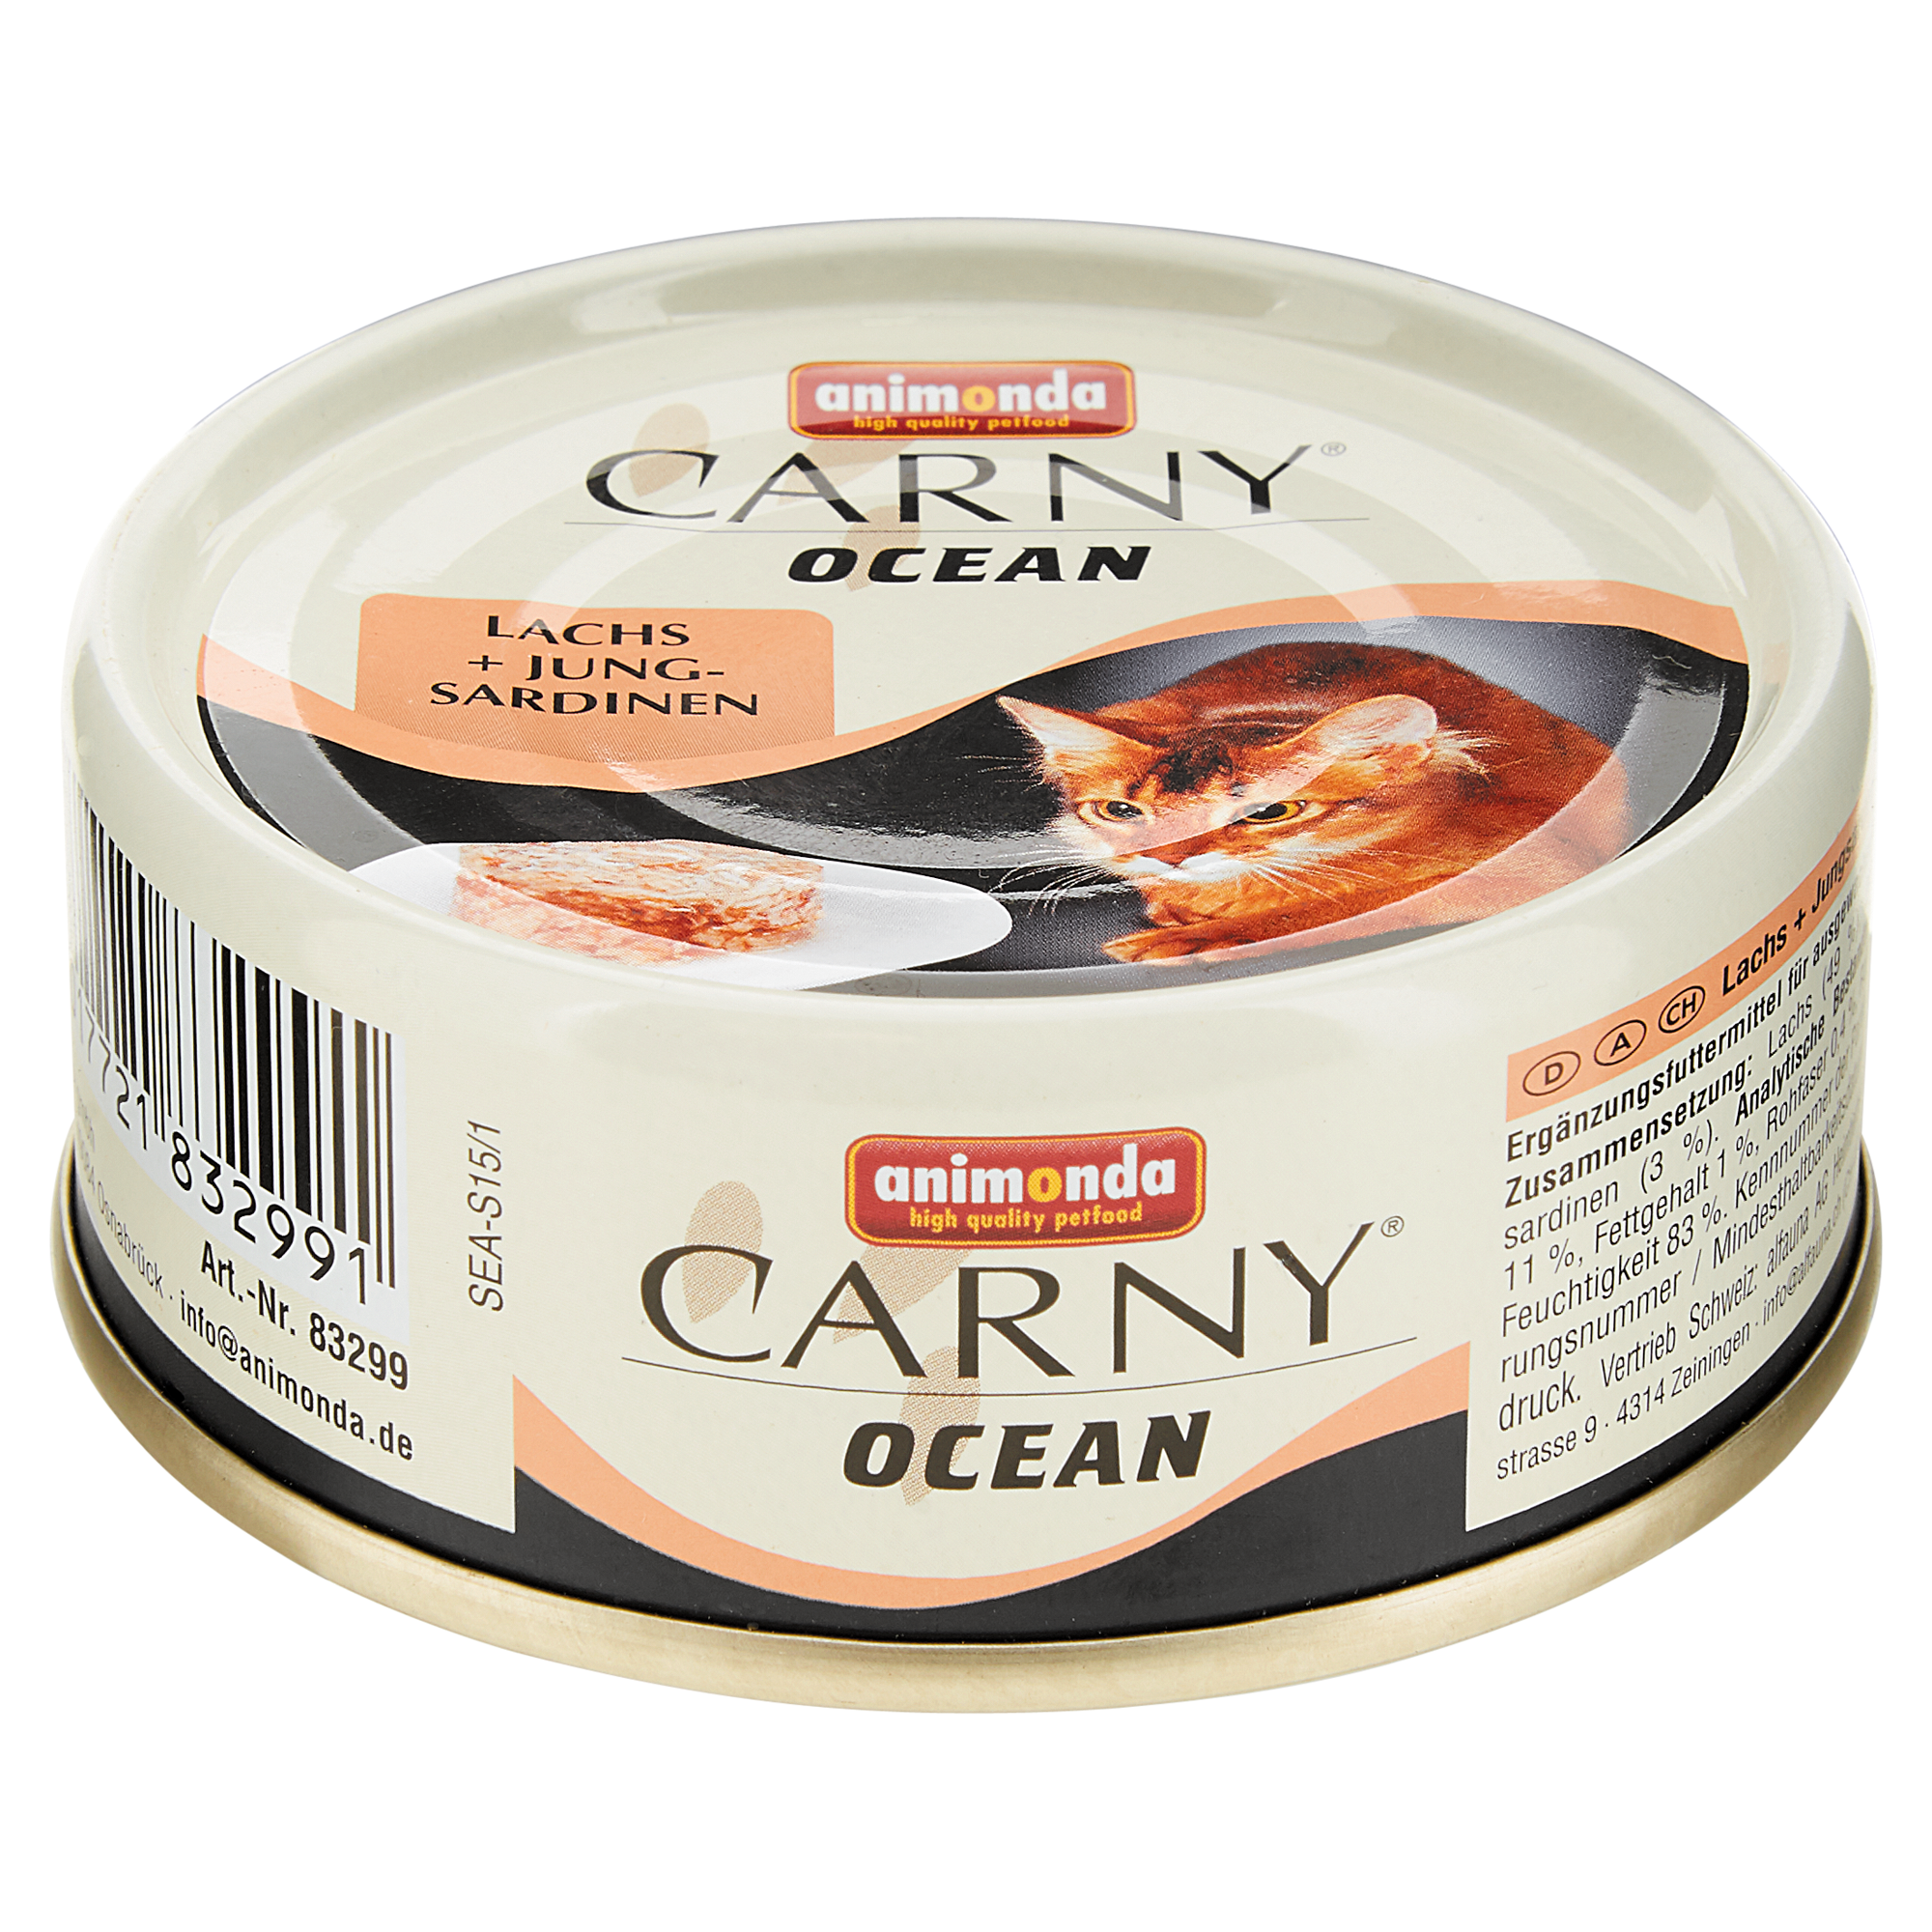 Katzennassfutter "Carny" Ocean mit Lachs/Jungsardinen 80 g + product picture